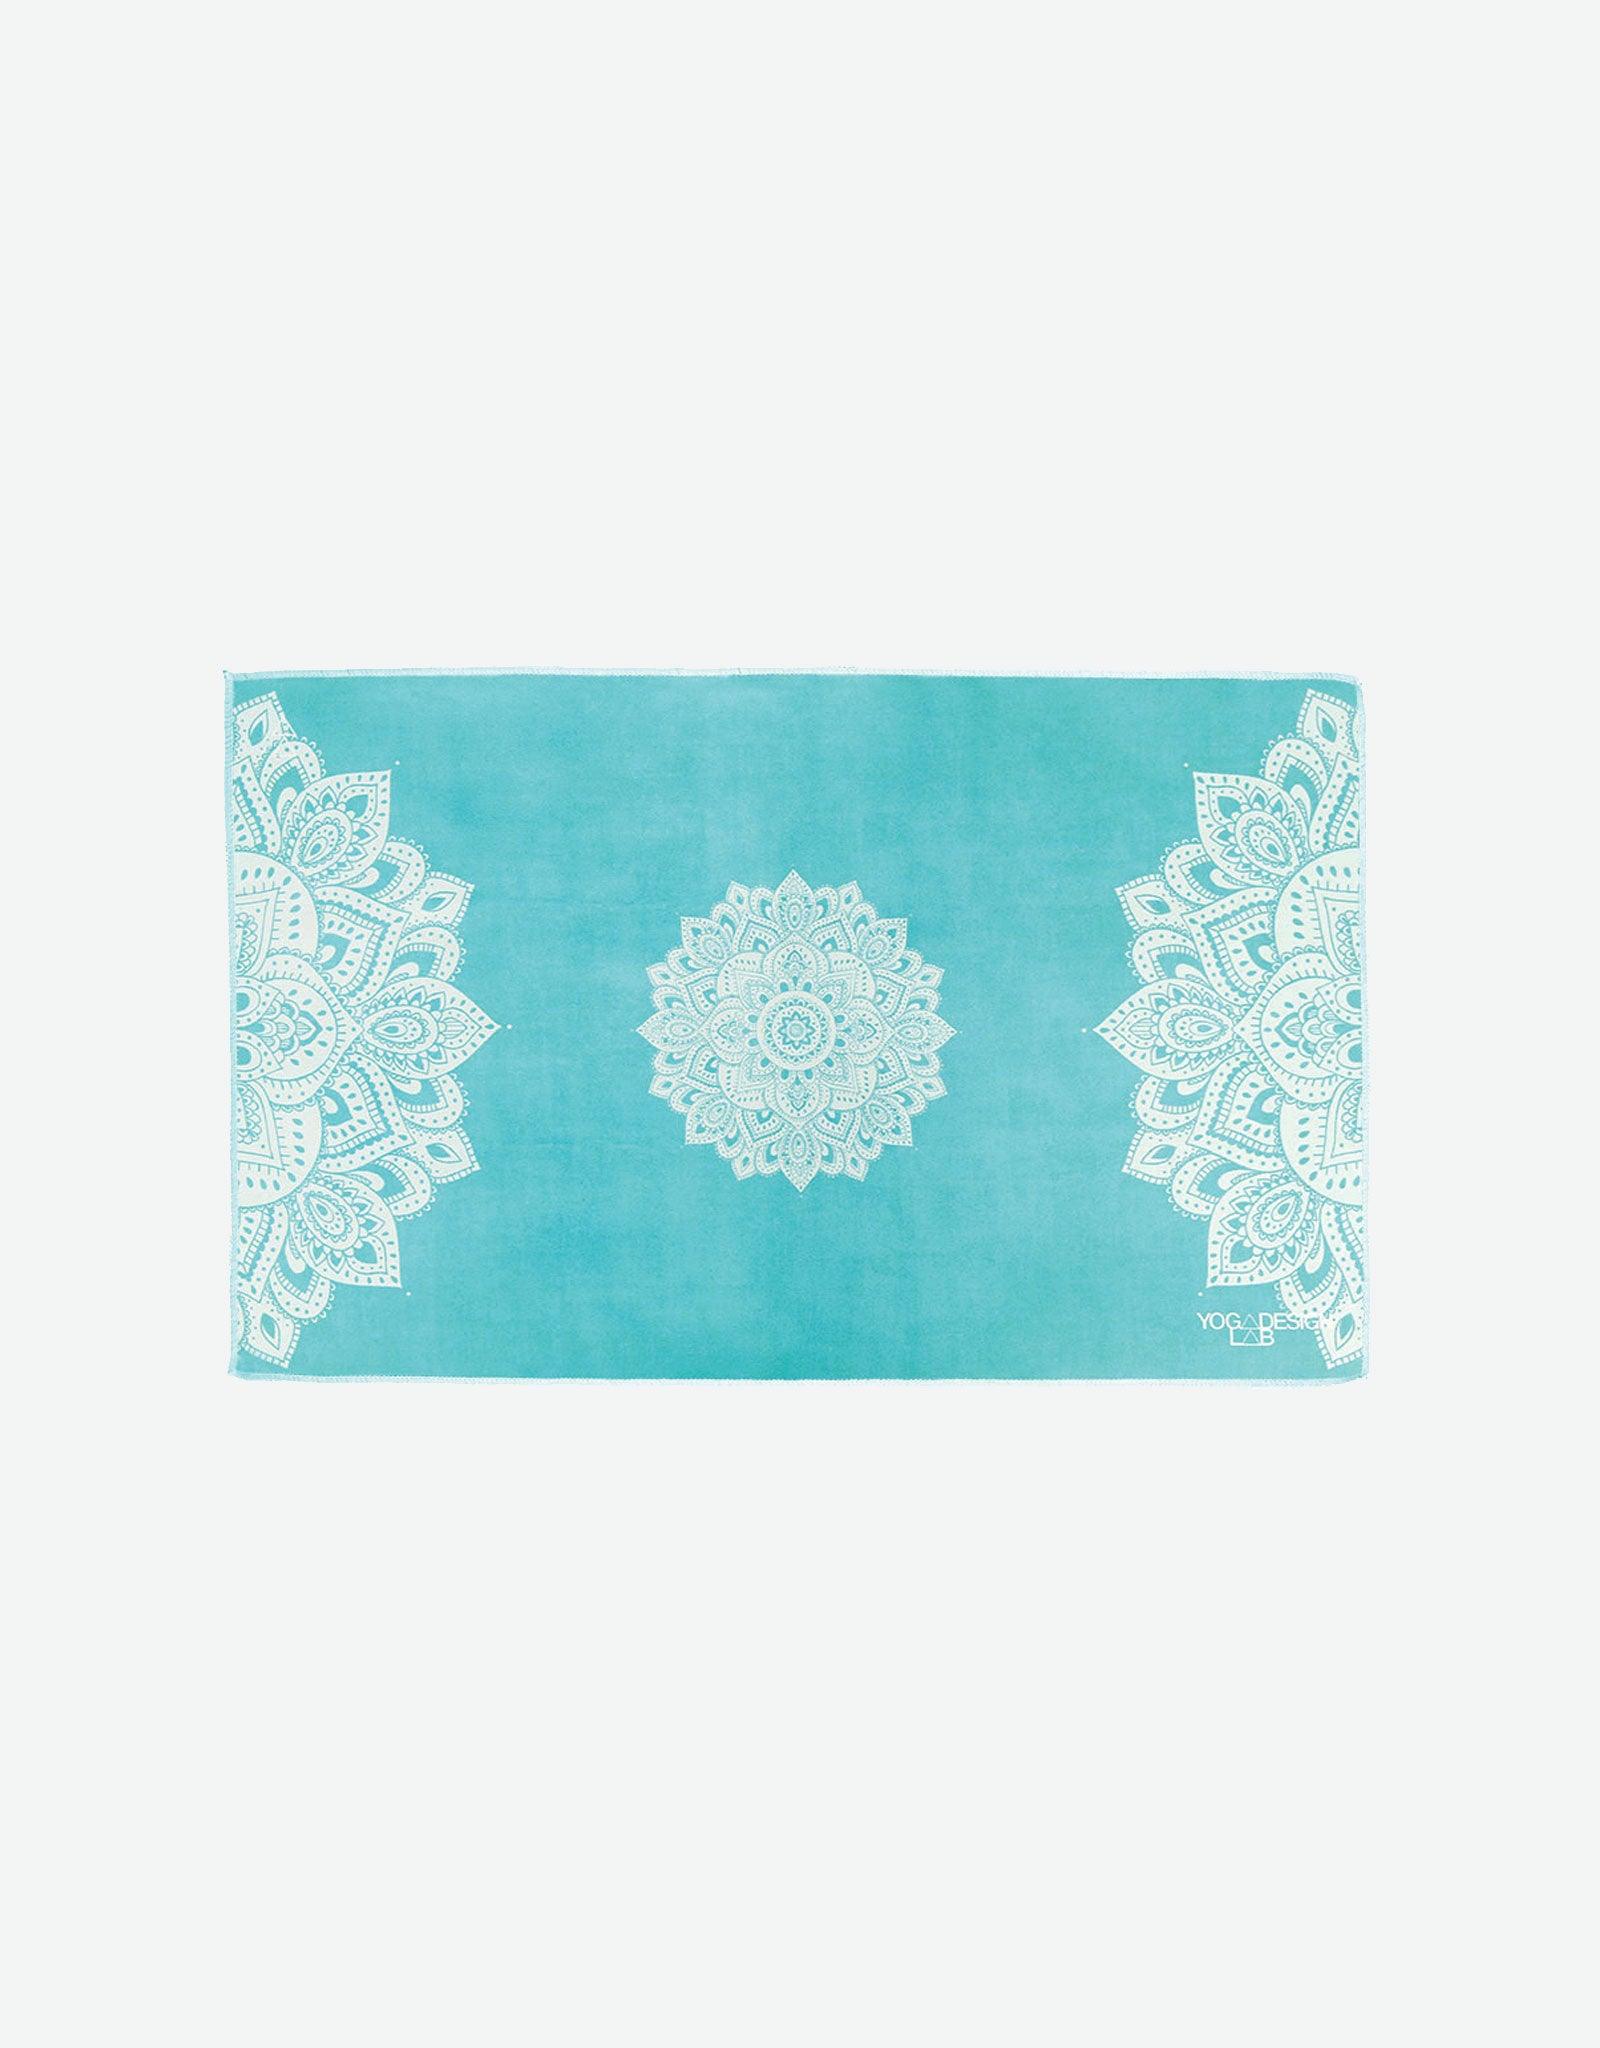 Yoga Hand Towel - Mandala Turquoise - Lightweight, Absorbent Material - Yoga Design Lab 